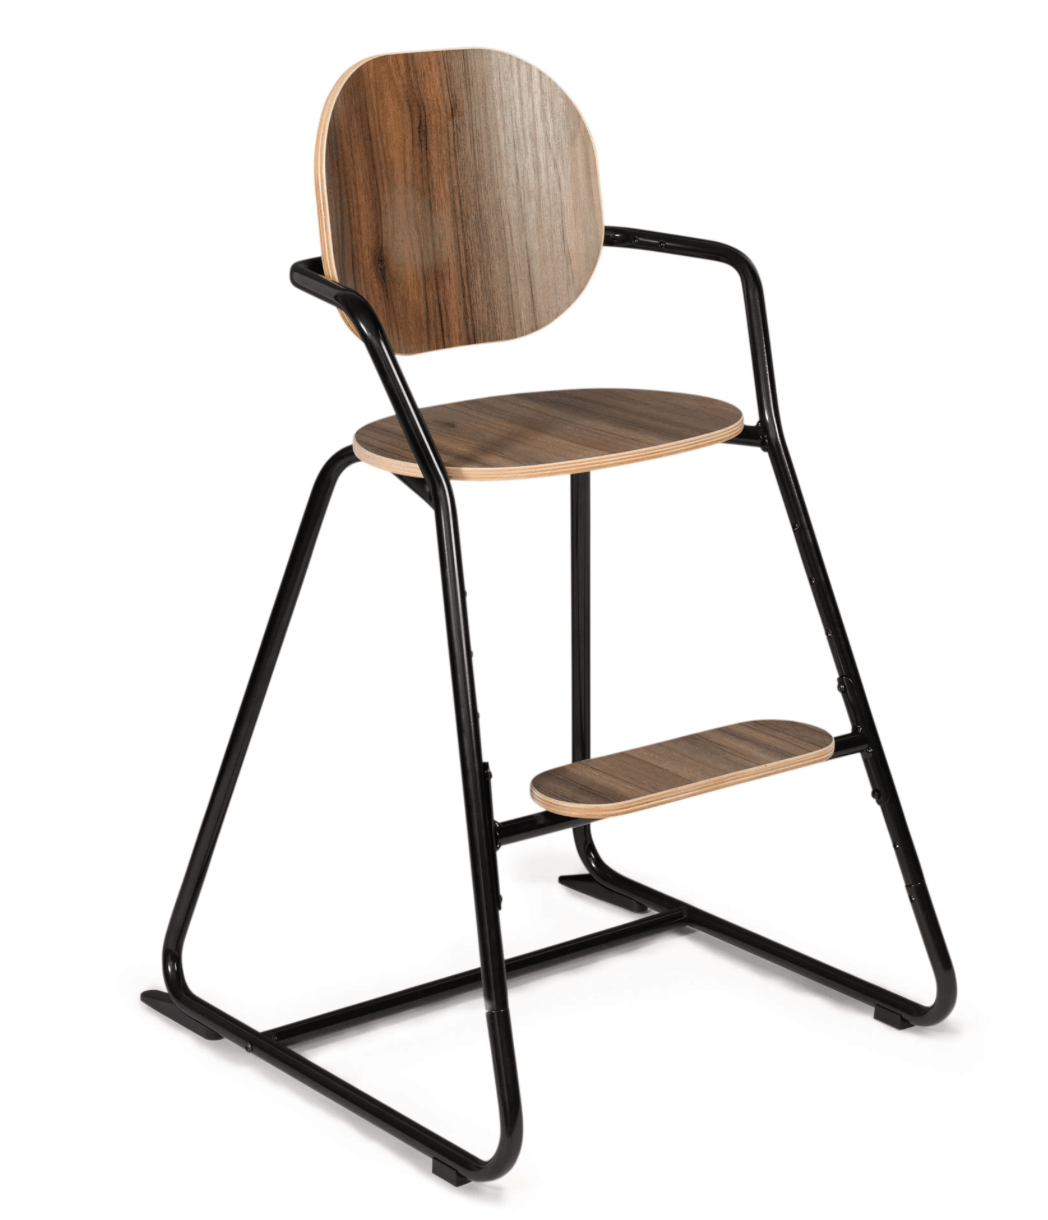 Charlie Crane TIBU High Chair, en del av kategorien Furniture - At Home Interiør